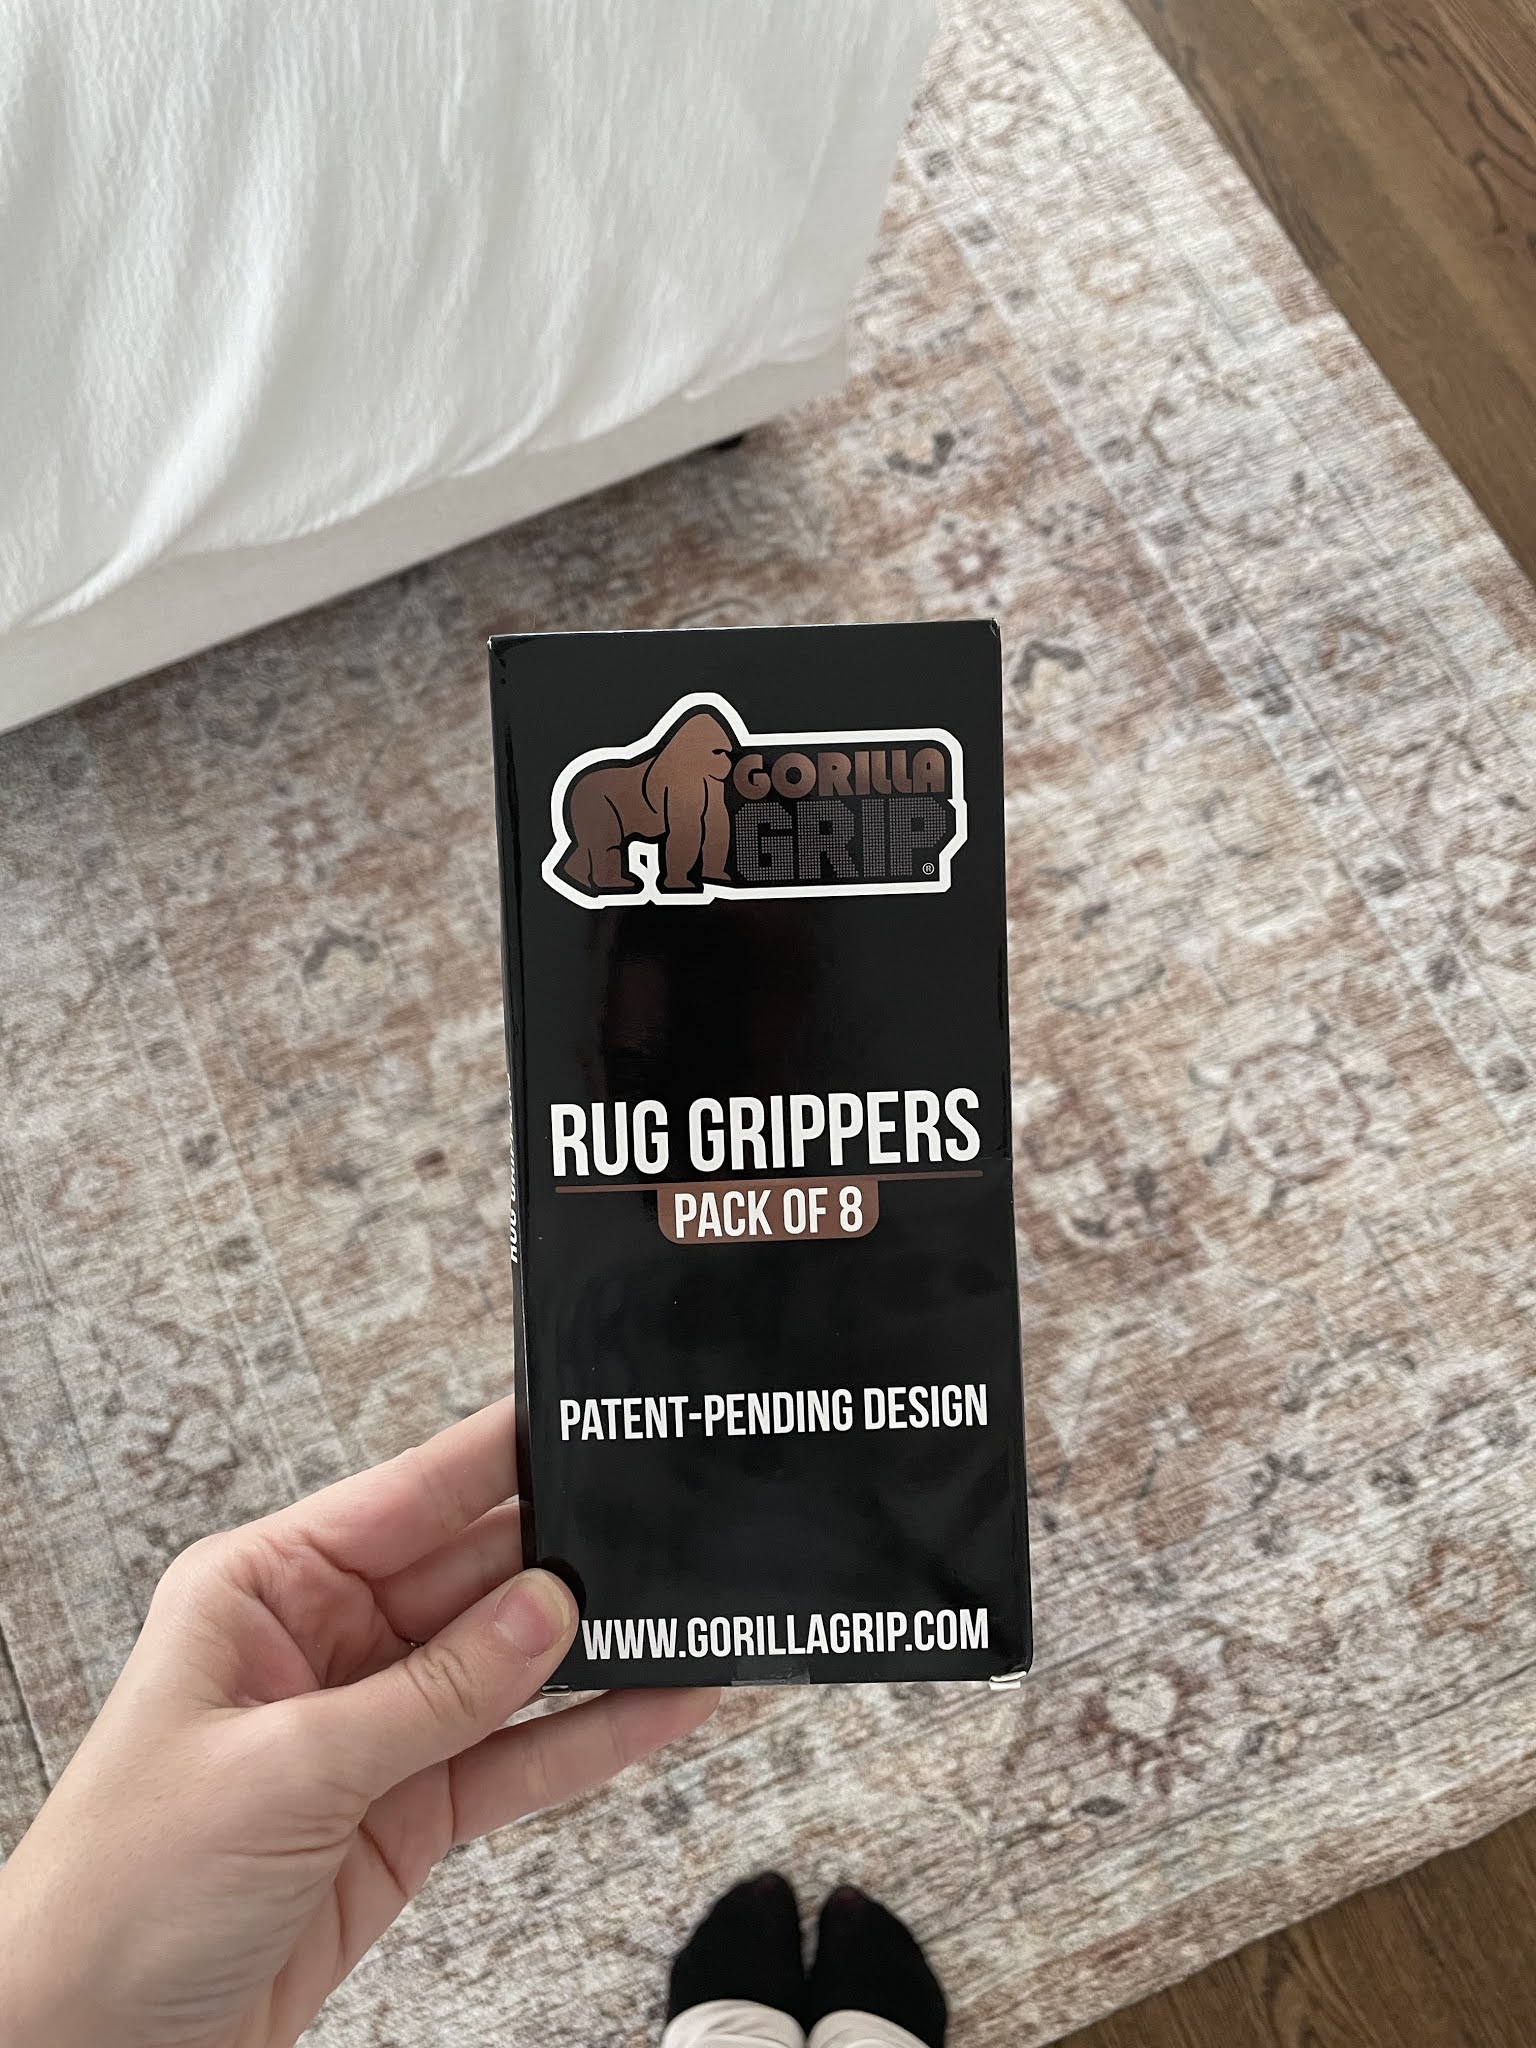 The Gorilla grip rug gripper review